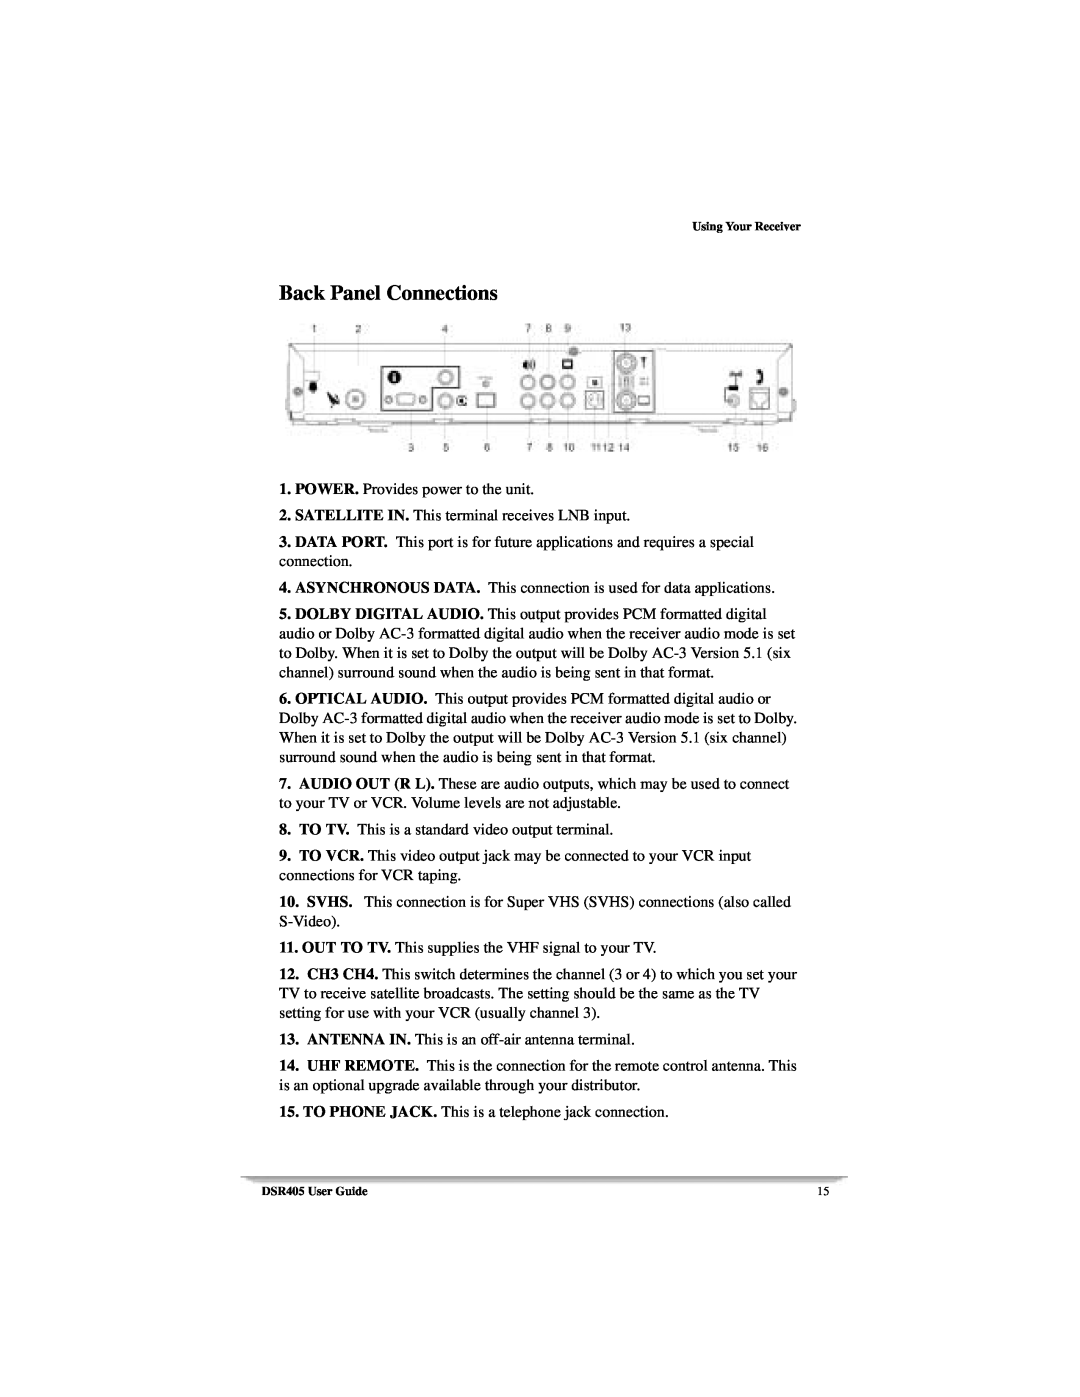 Motorola DSR405 manual Back Panel Connections 